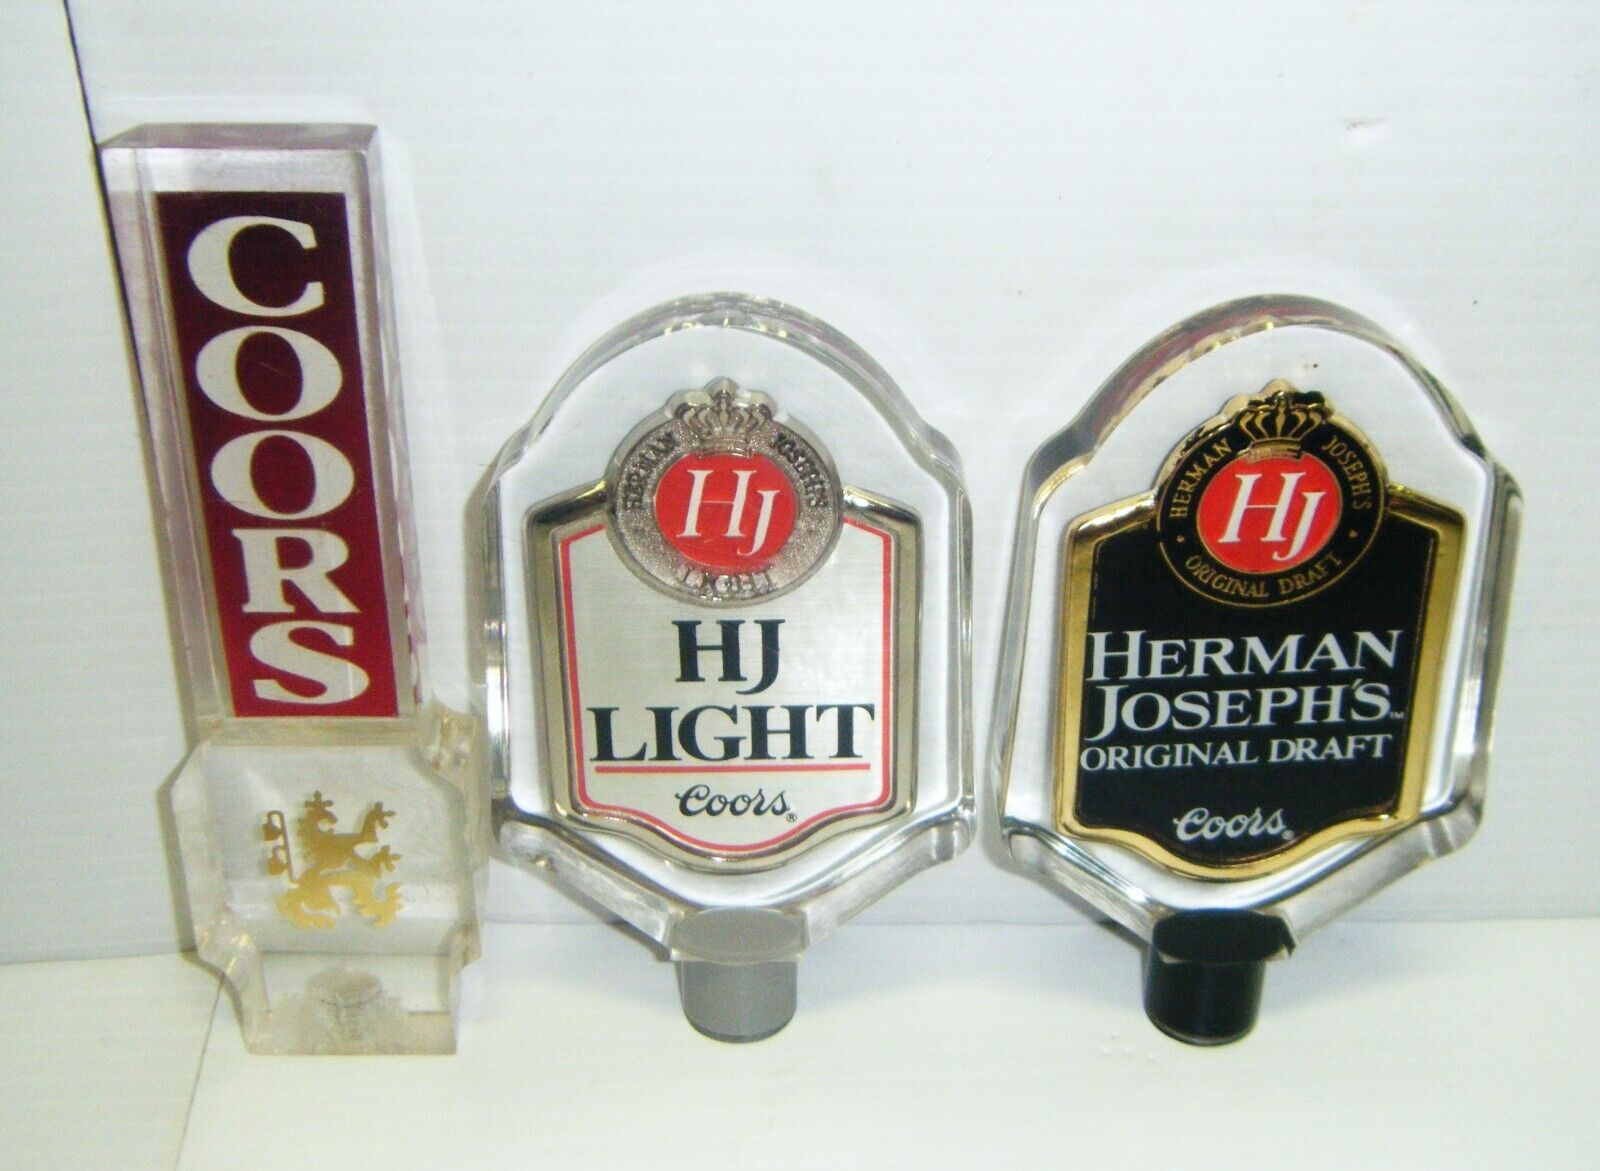 3 Vintage Coors, Herman Josephs and HJ Light Beer Tap Handles, 2 have never been